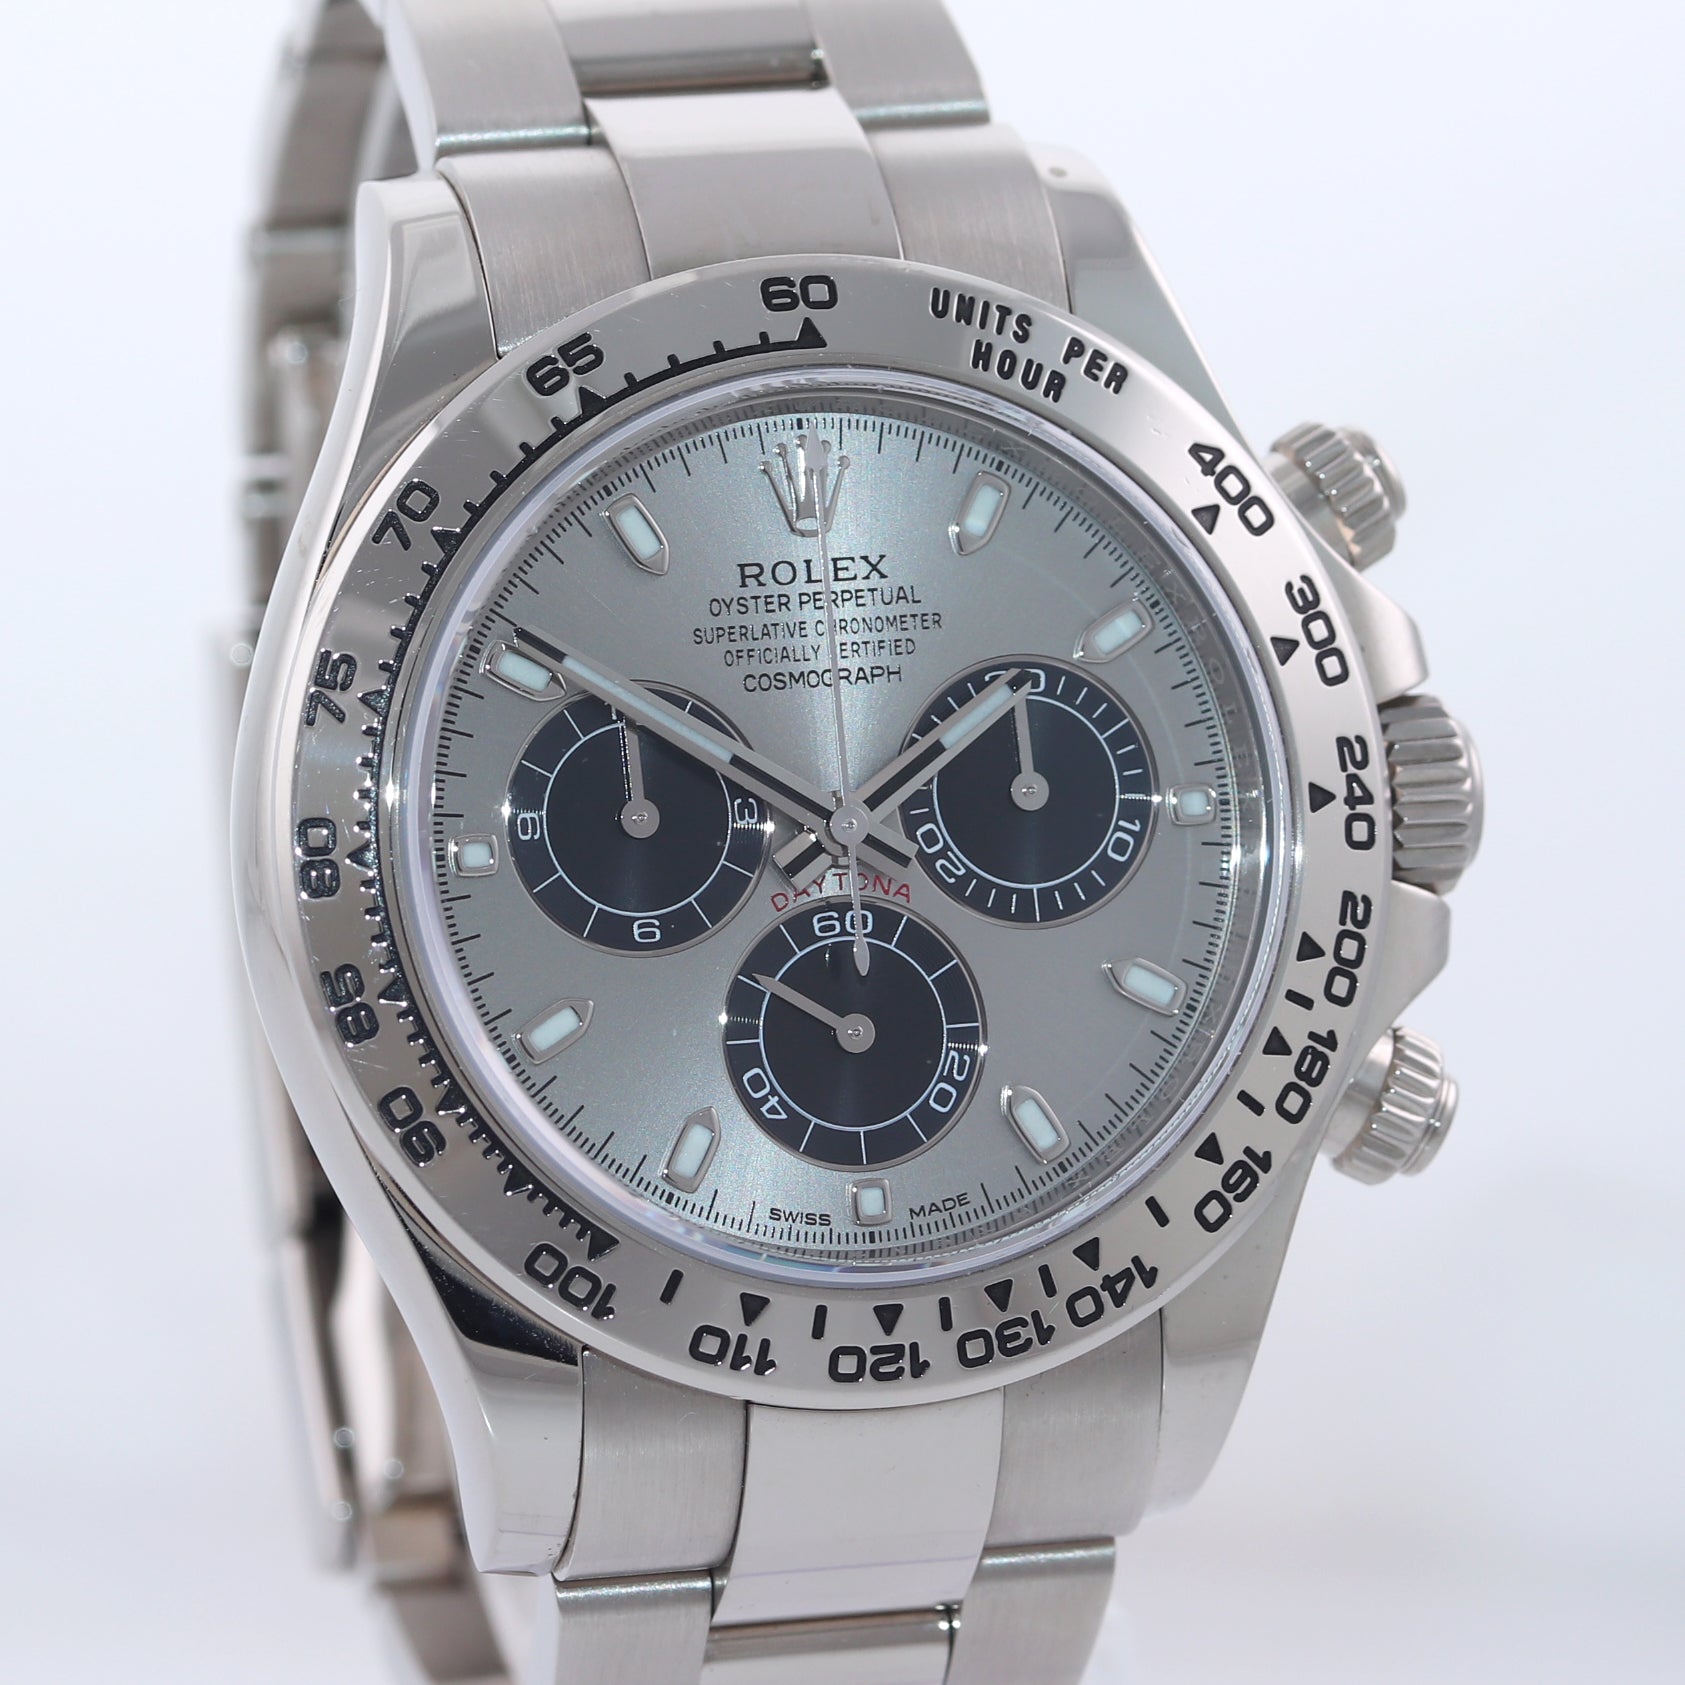 Mint 2018 PAPERS Rolex Daytona Silver Black Panda Dial 116509 White Gold Watch